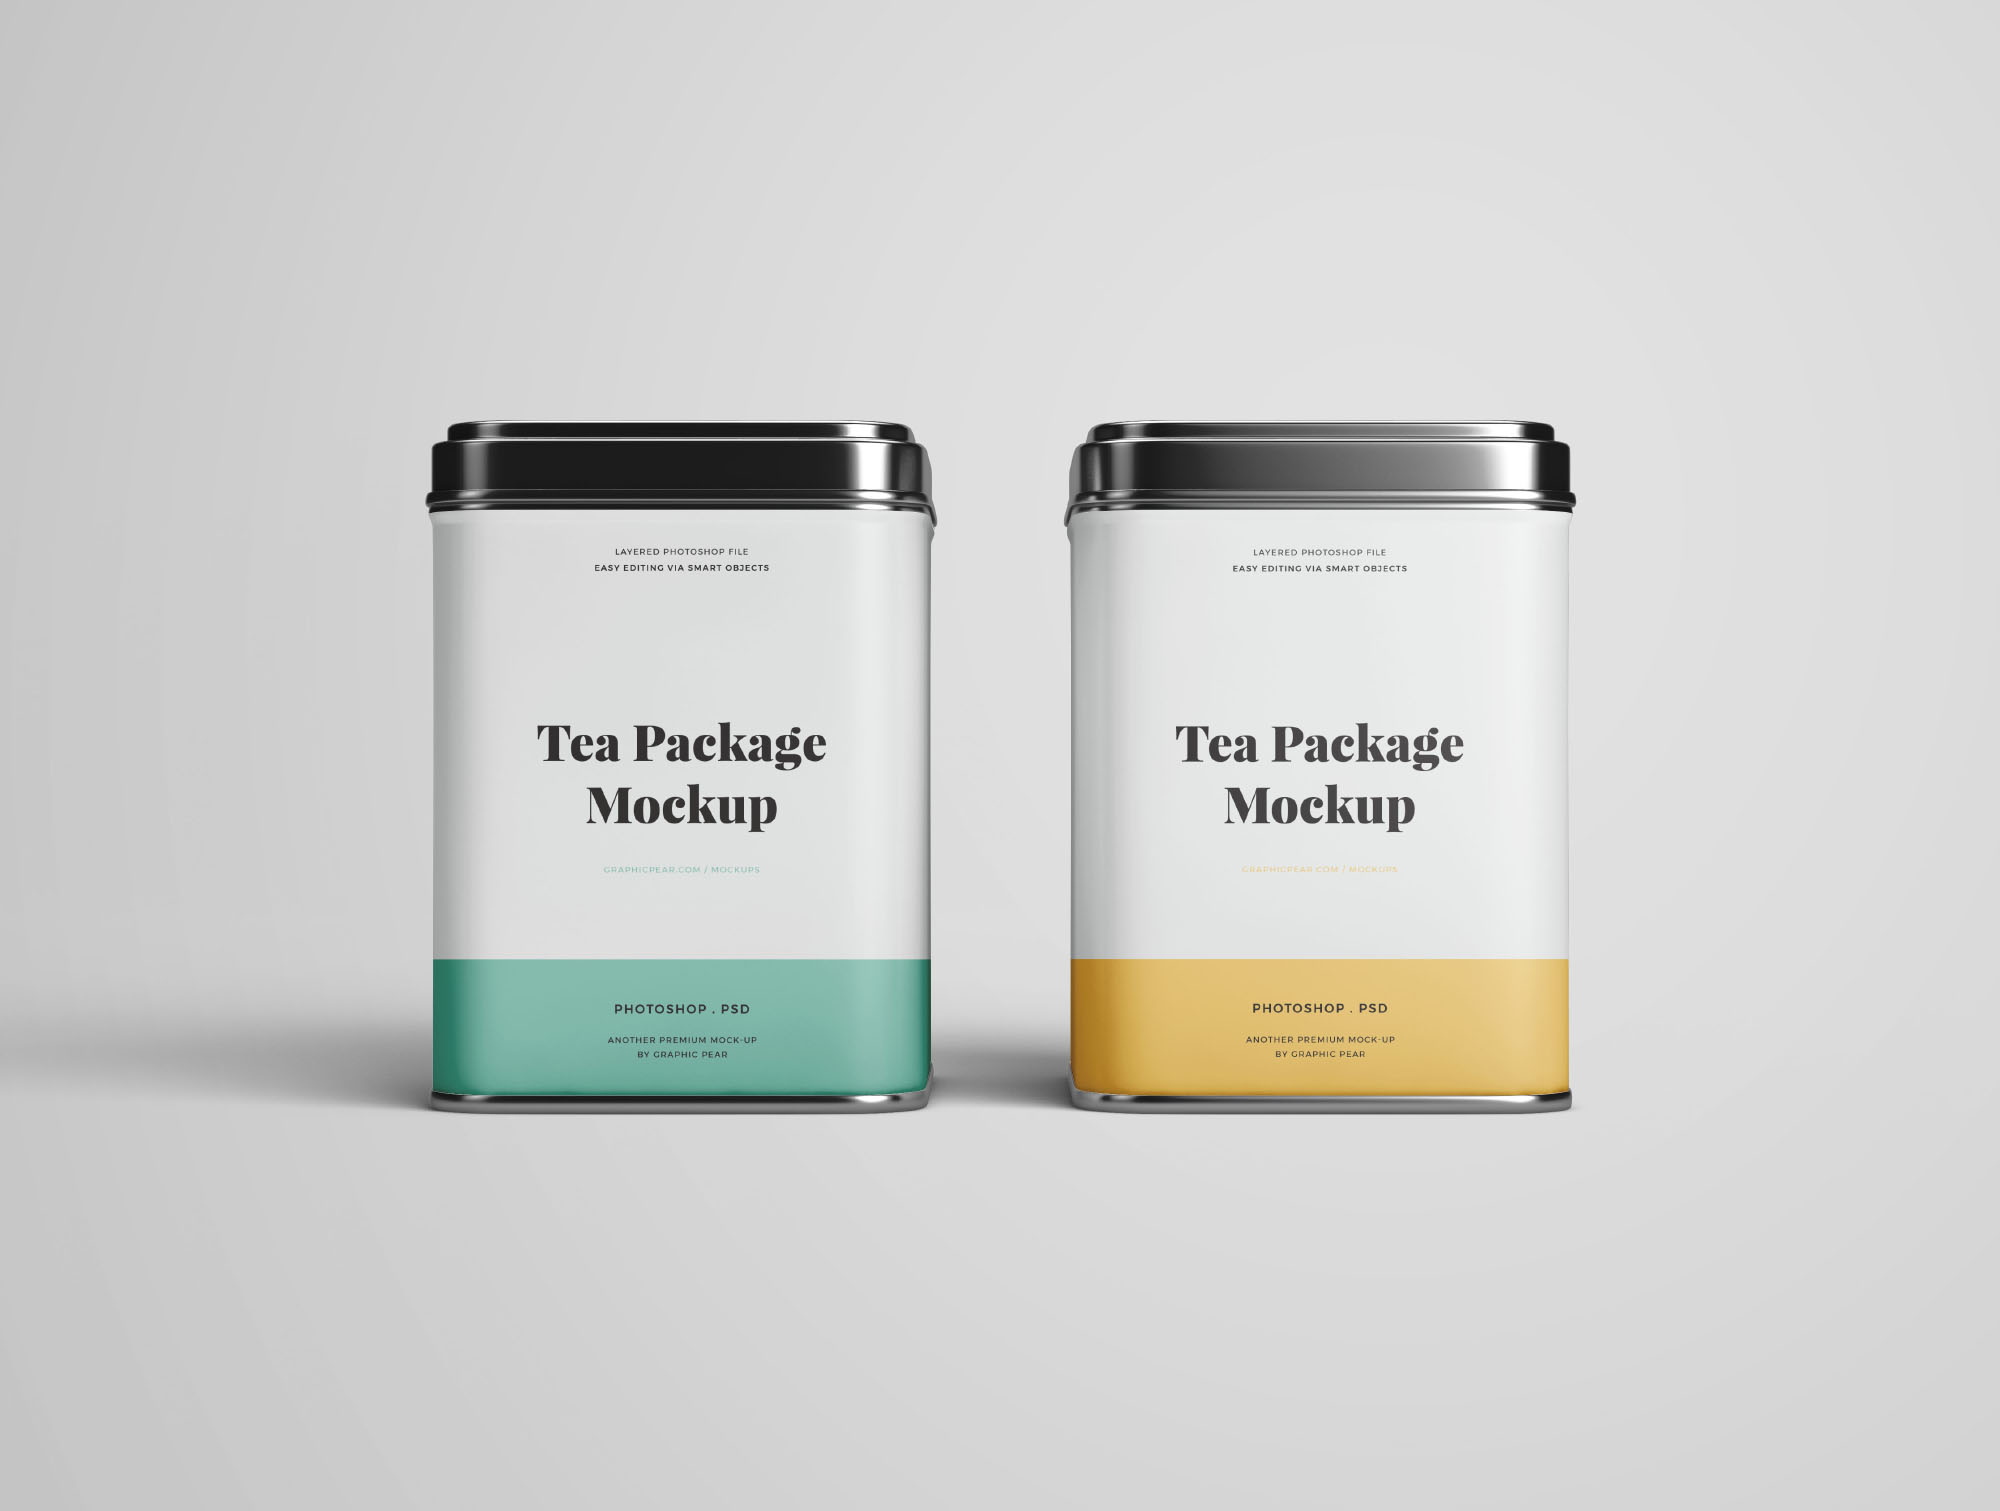 茶叶铁盒包装设计效果样机 Tea Package Mockup插图(4)